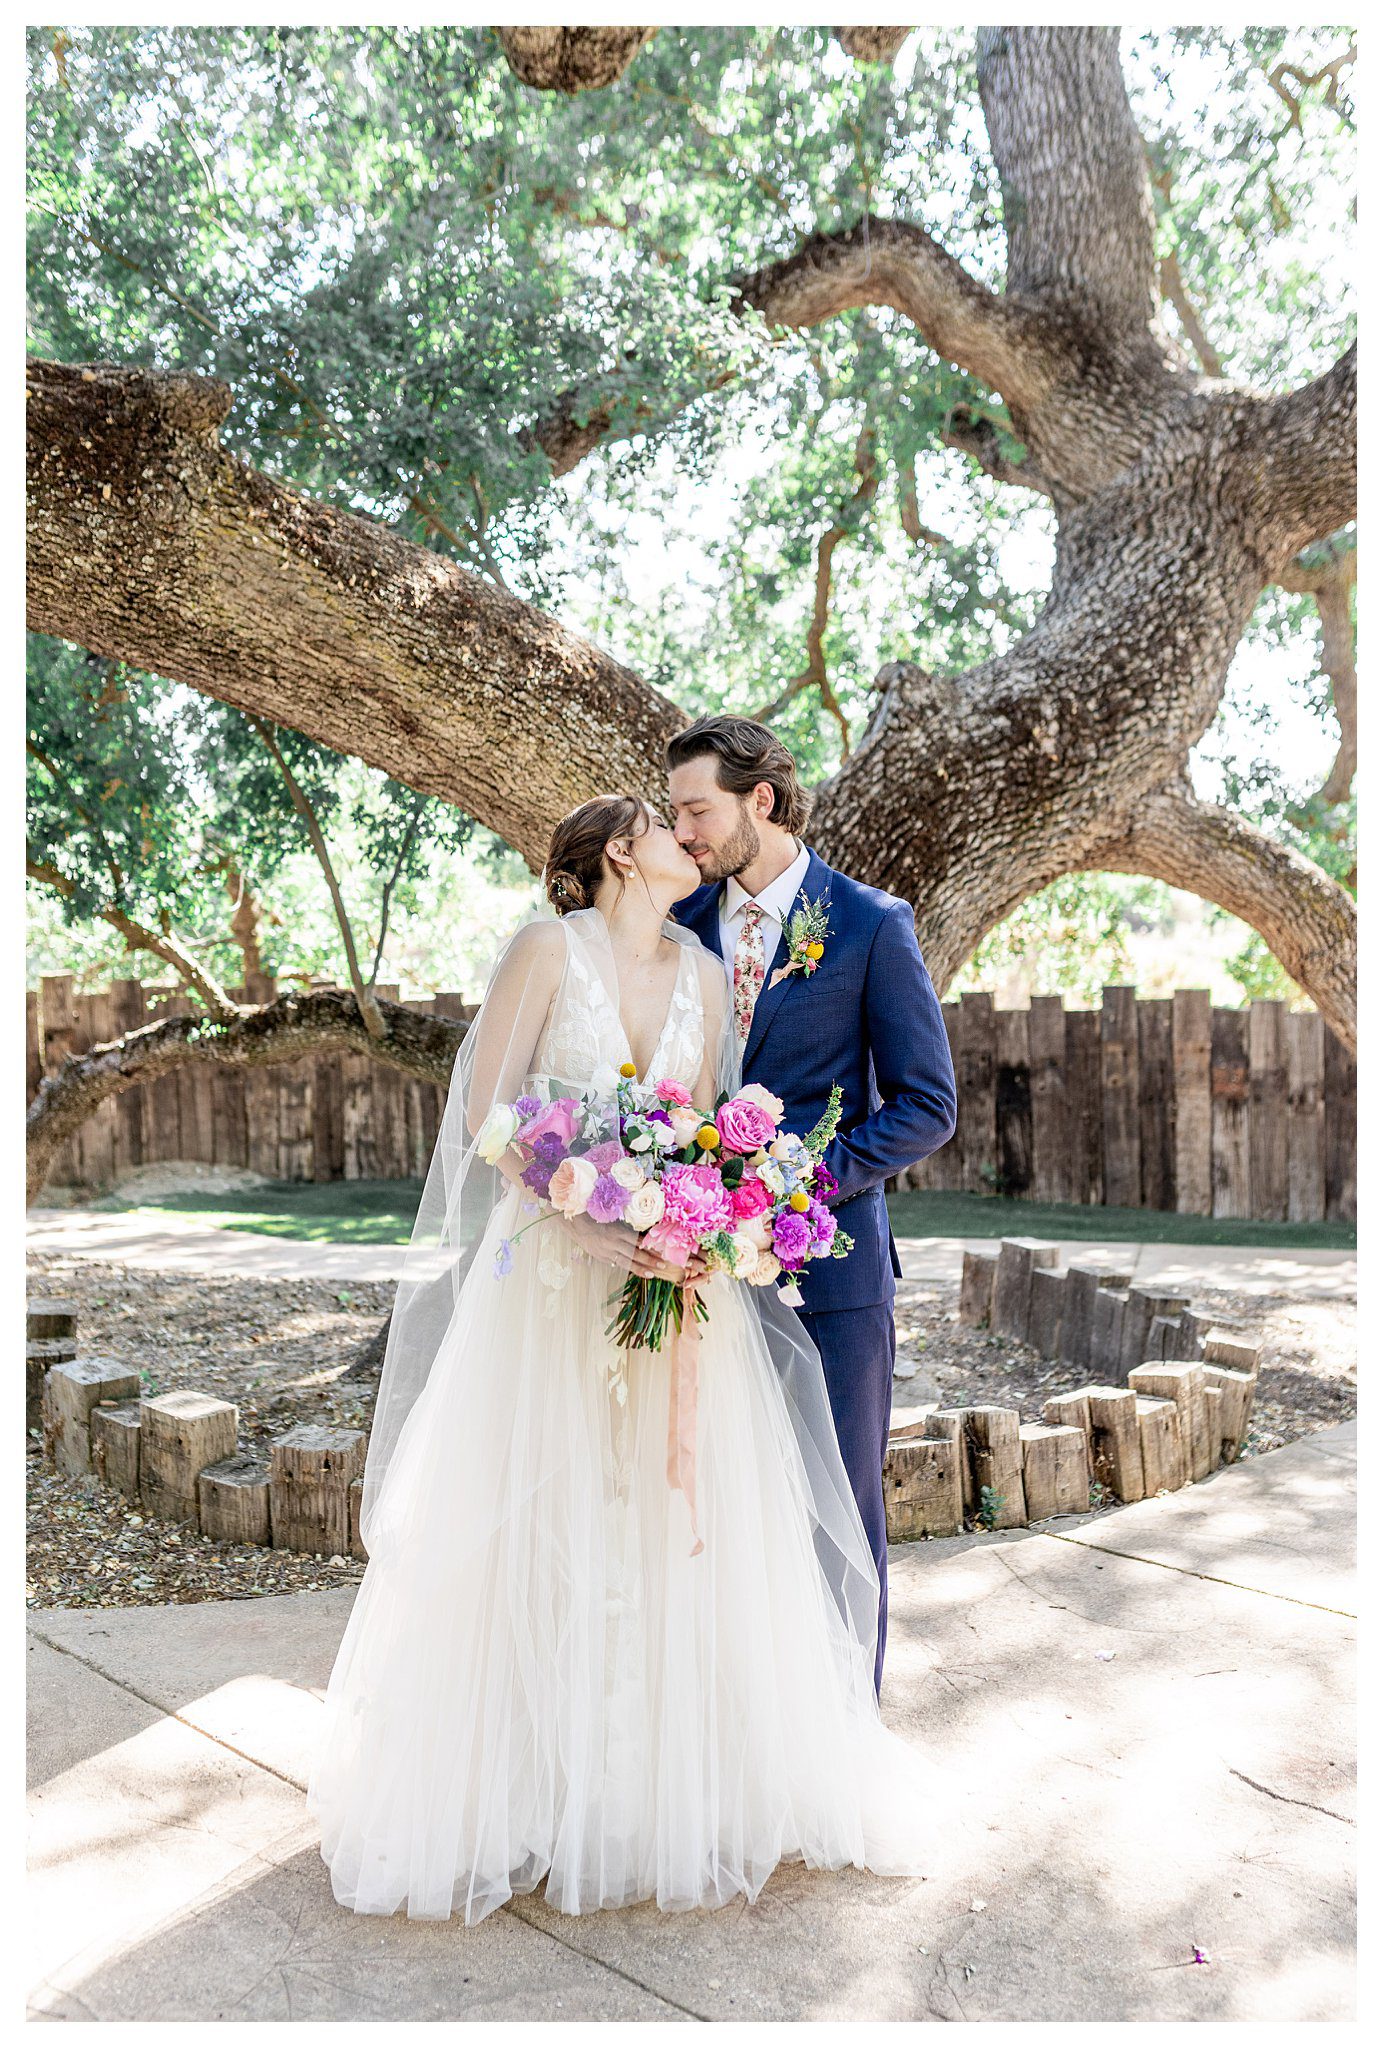 A bride and groom kiss under the oak tree at Hartley farms, a san luis obispo garden wedding venue. 